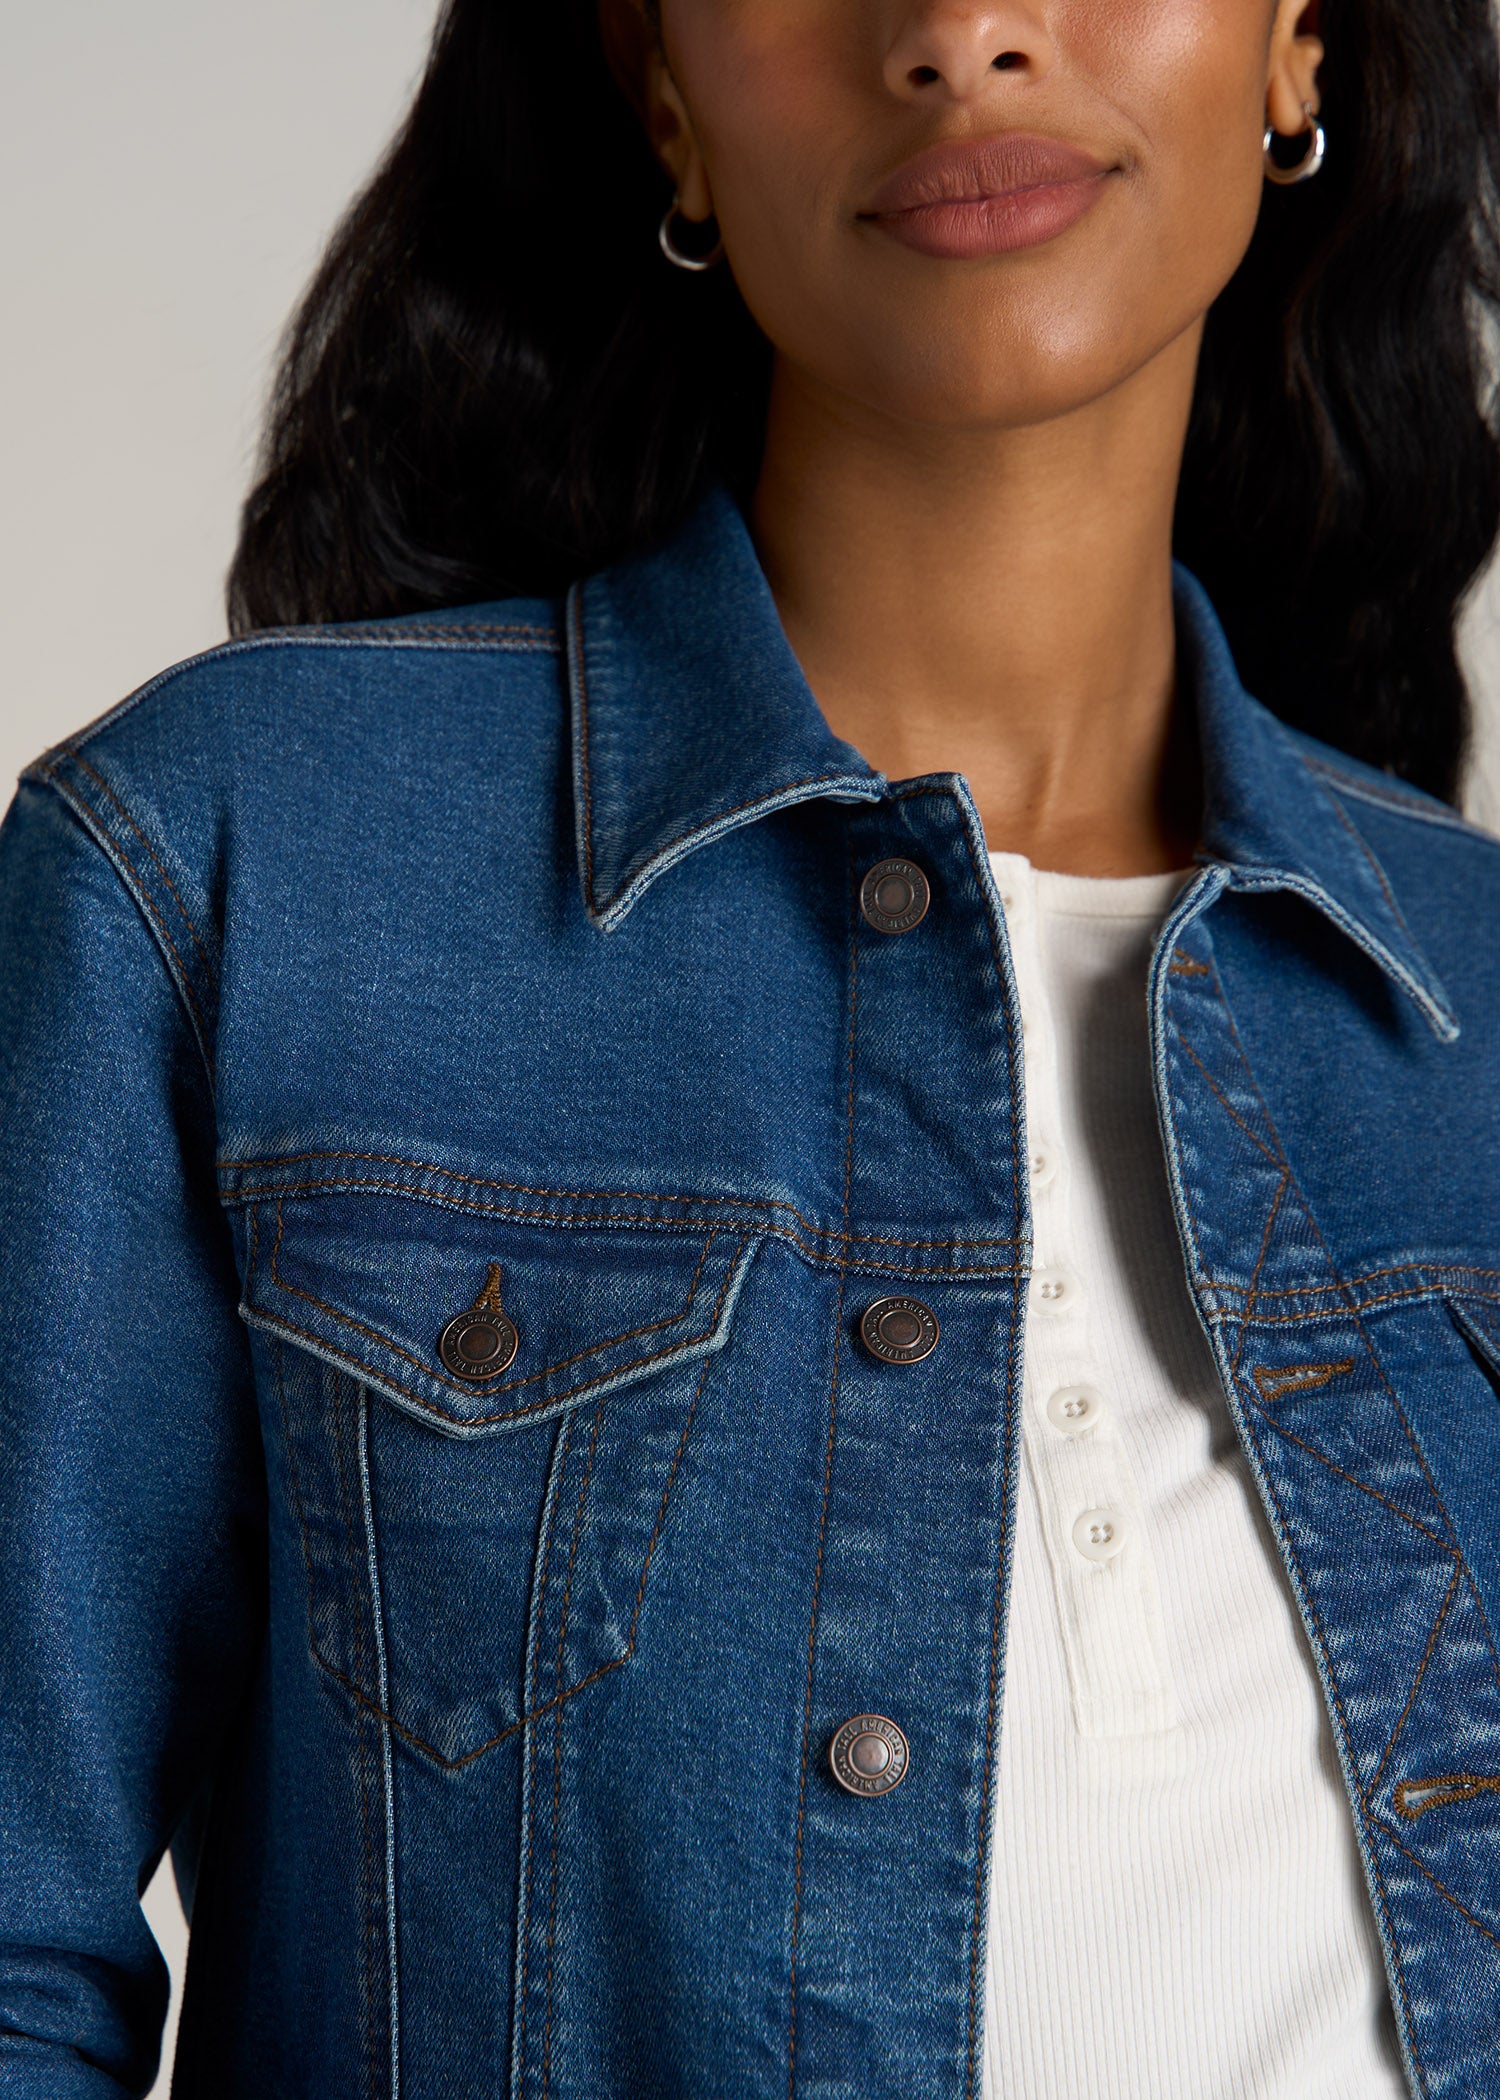 Women's Tall Denim Jacket in Vintage Medium Blue